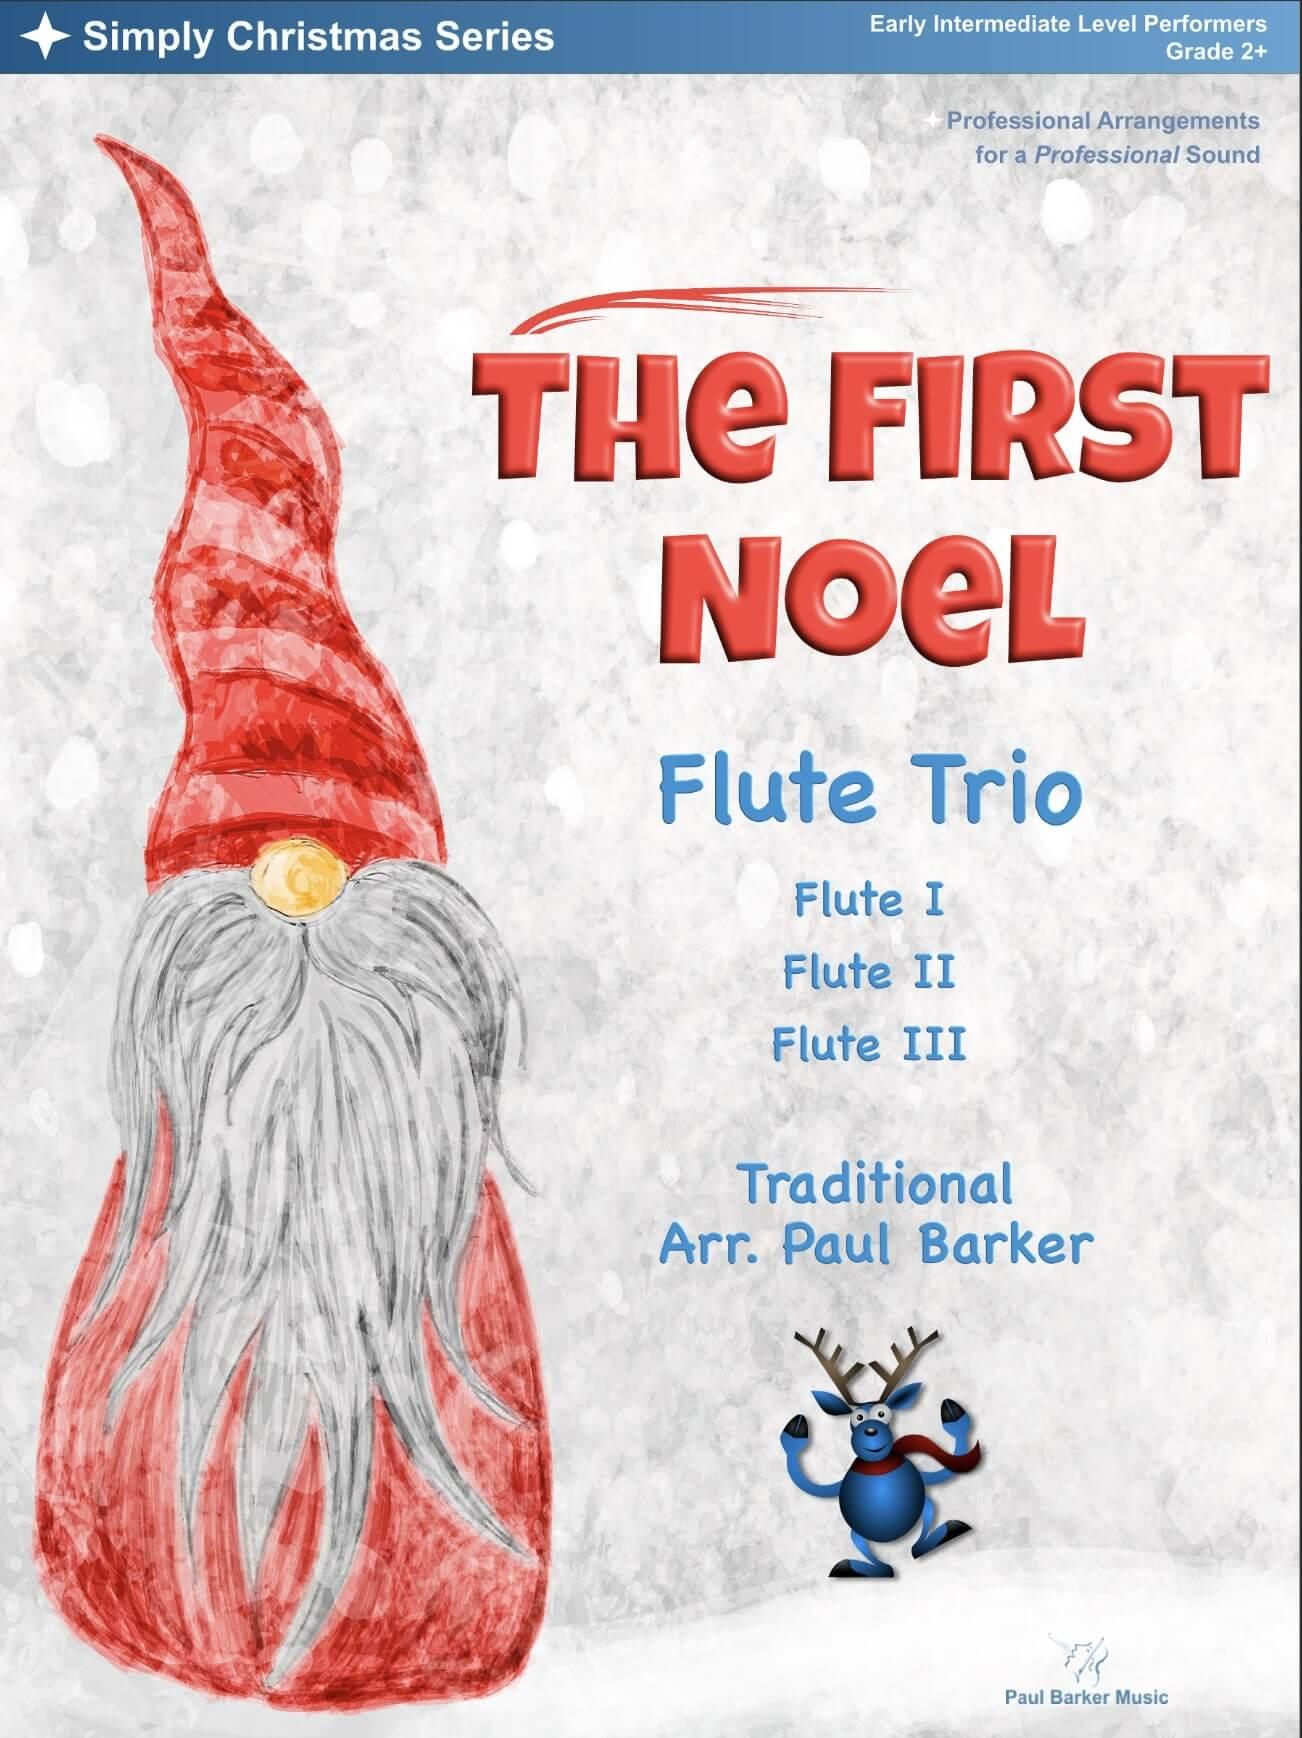 The First Noel (Flute Trio) - Paul Barker Music 